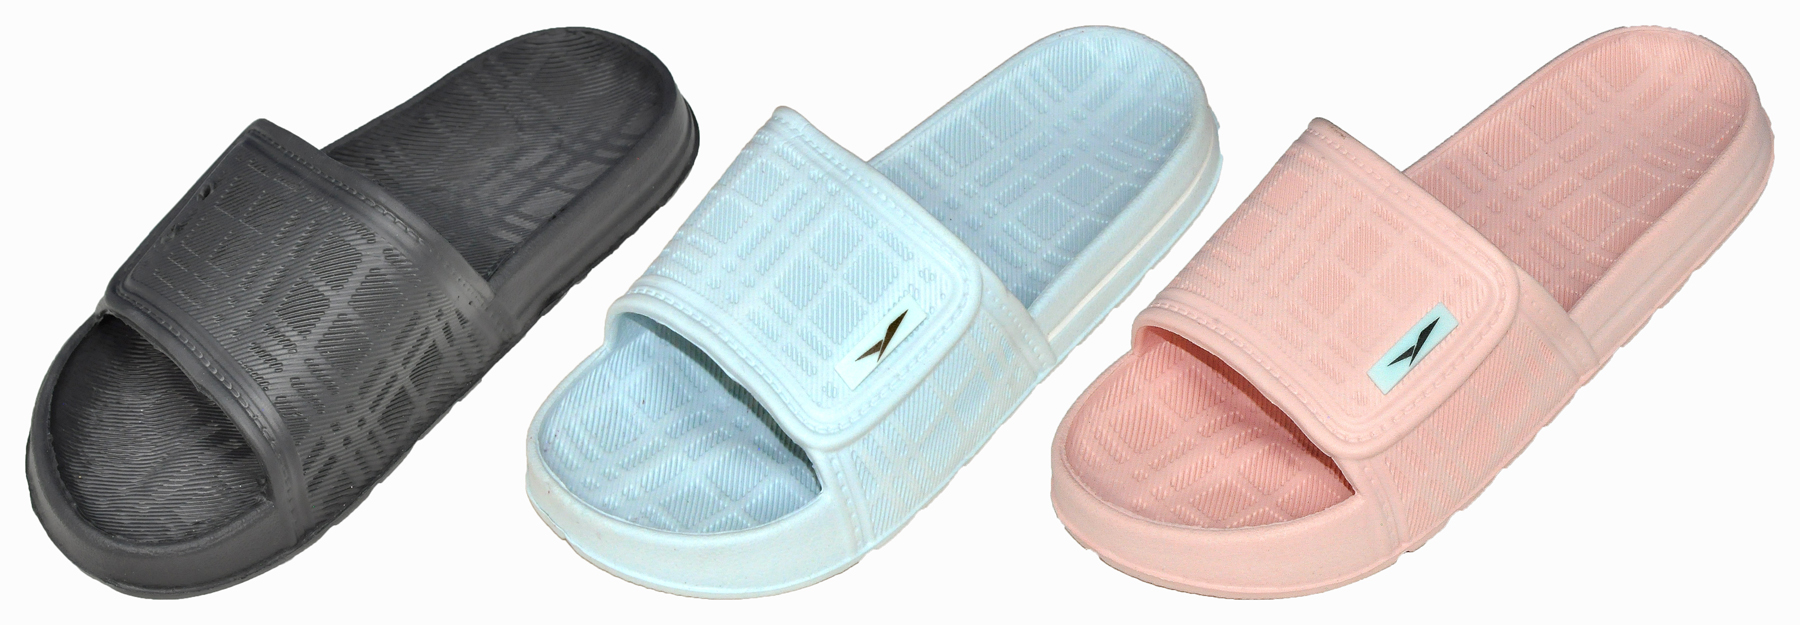 Women's Arizona Slide Shower SANDALS w/ Soft Footbed